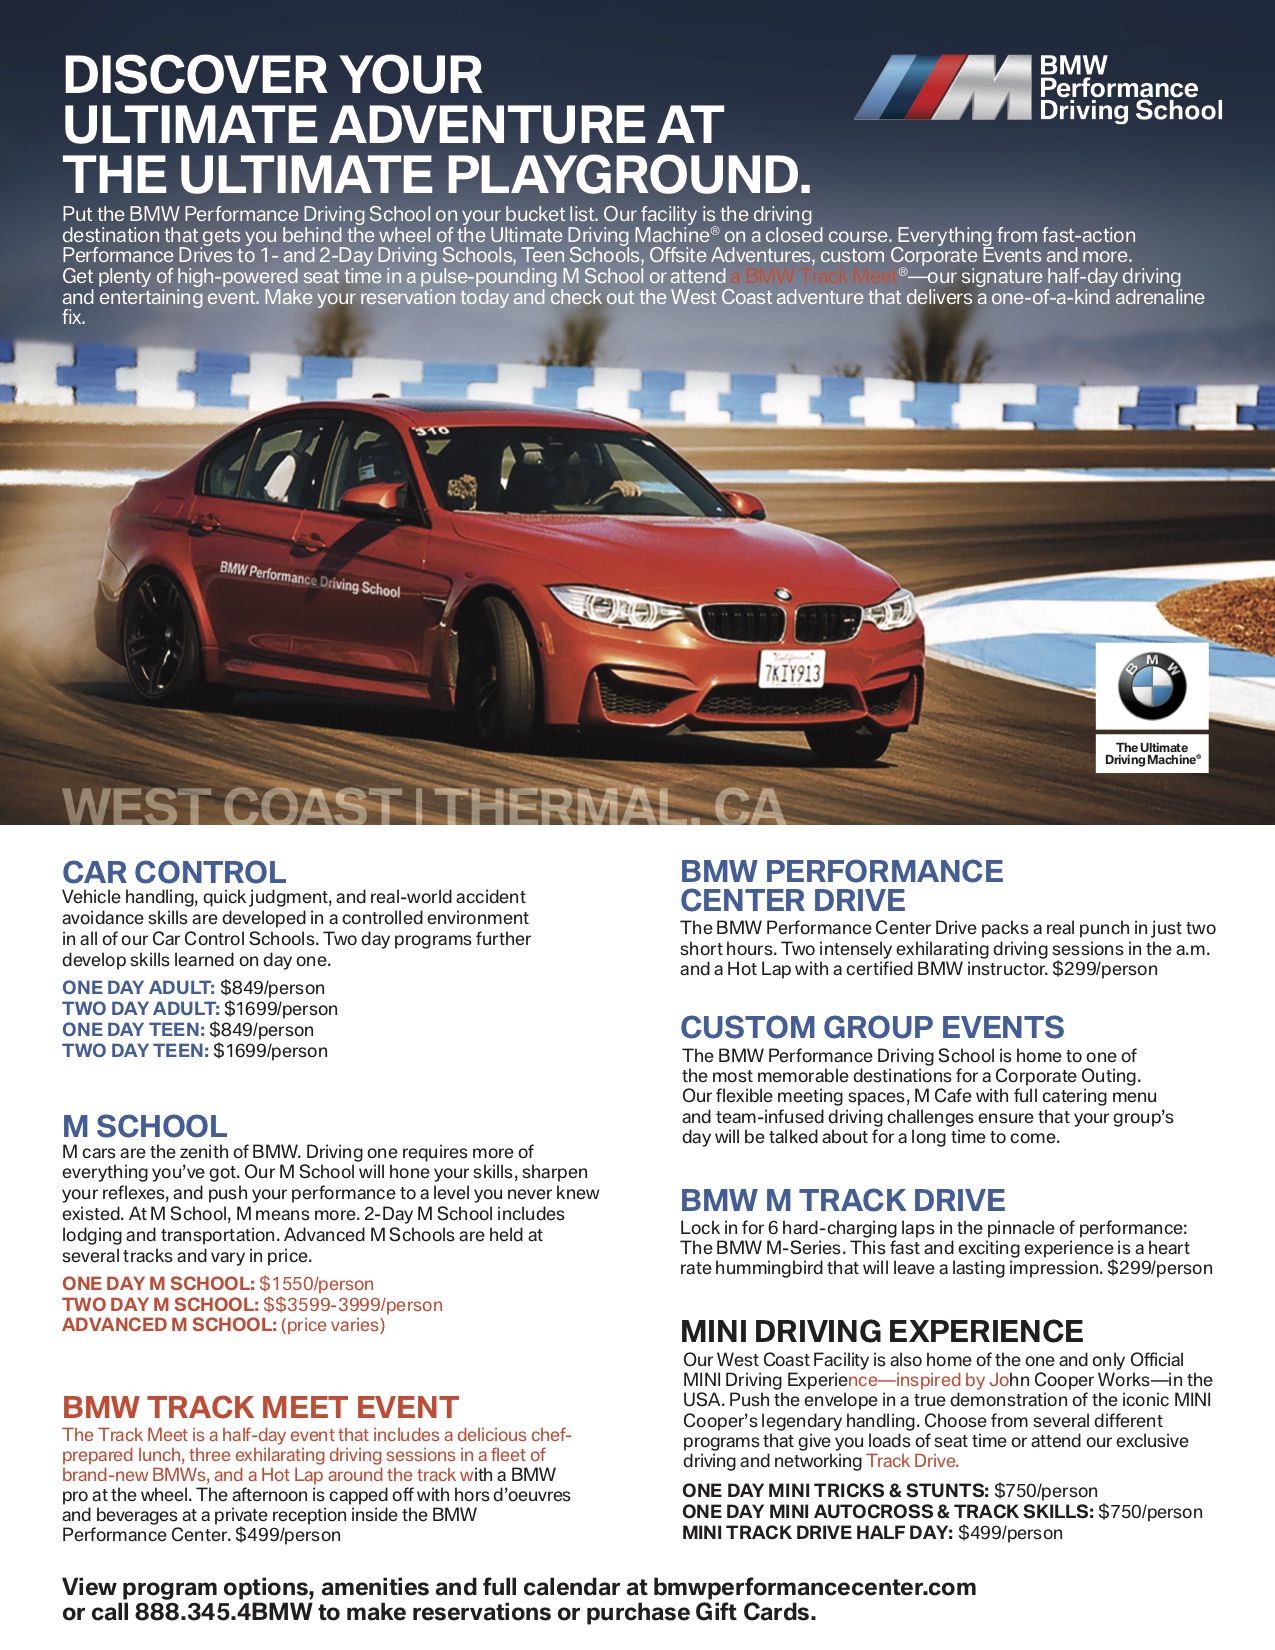 BMW Performance Center Pricing